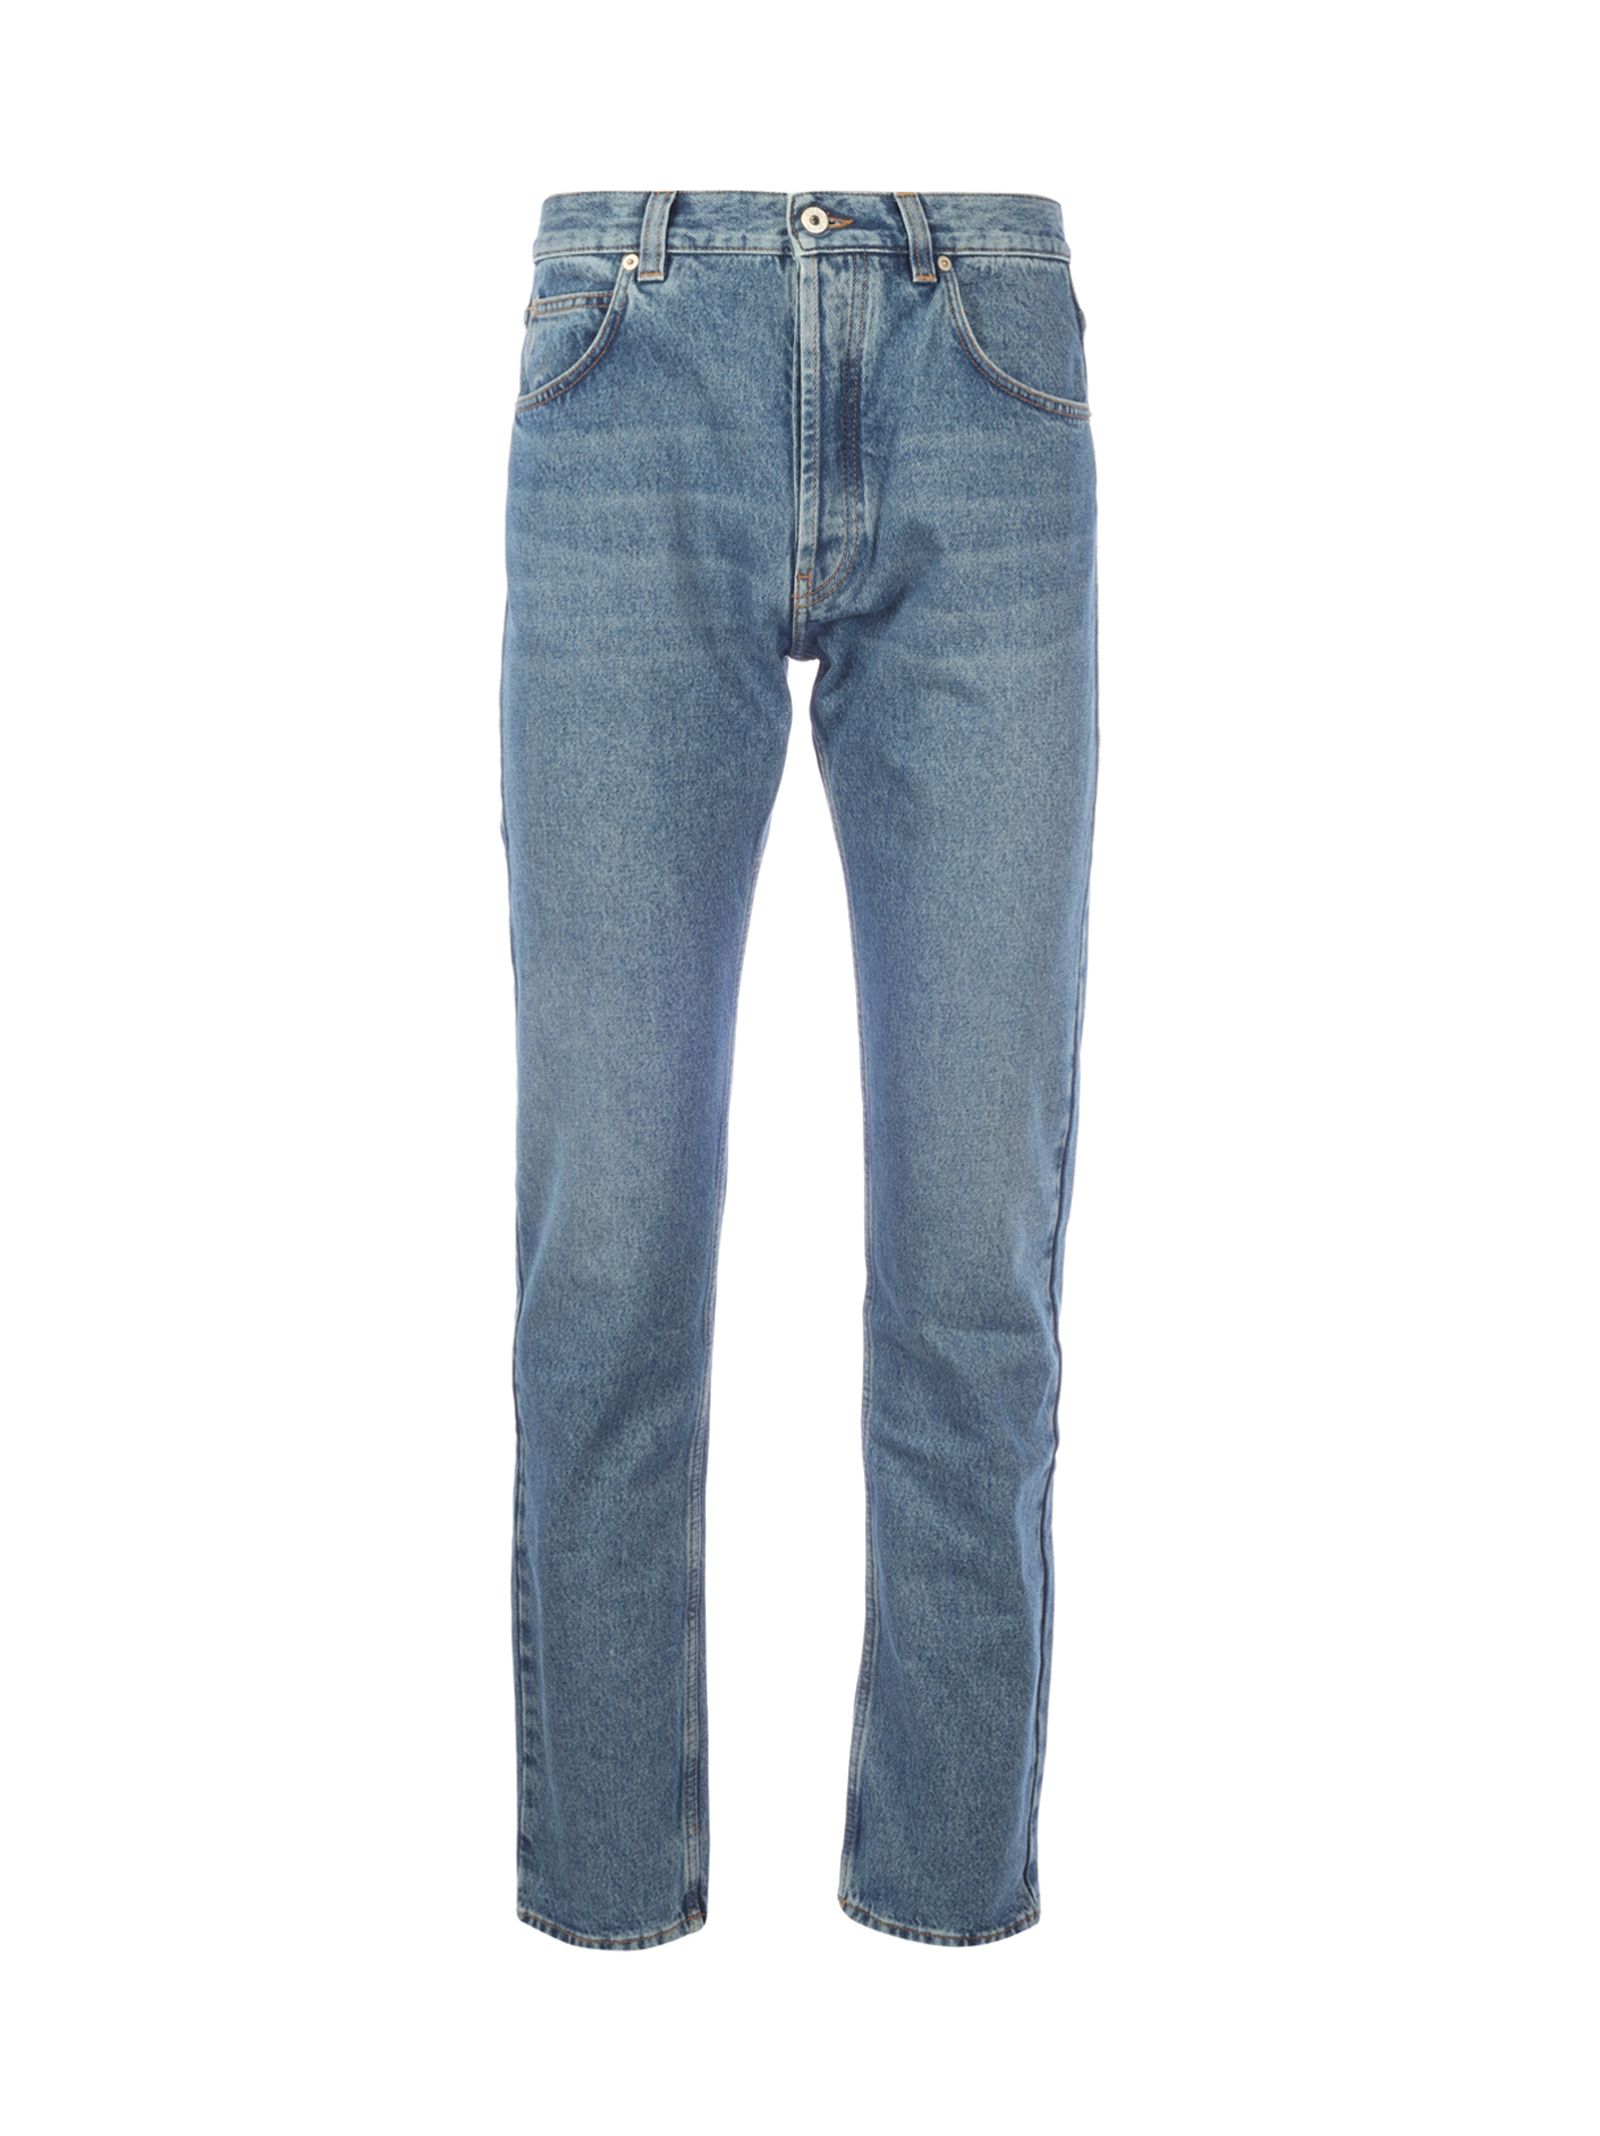 Loewe Jeans | italist, ALWAYS LIKE A SALE